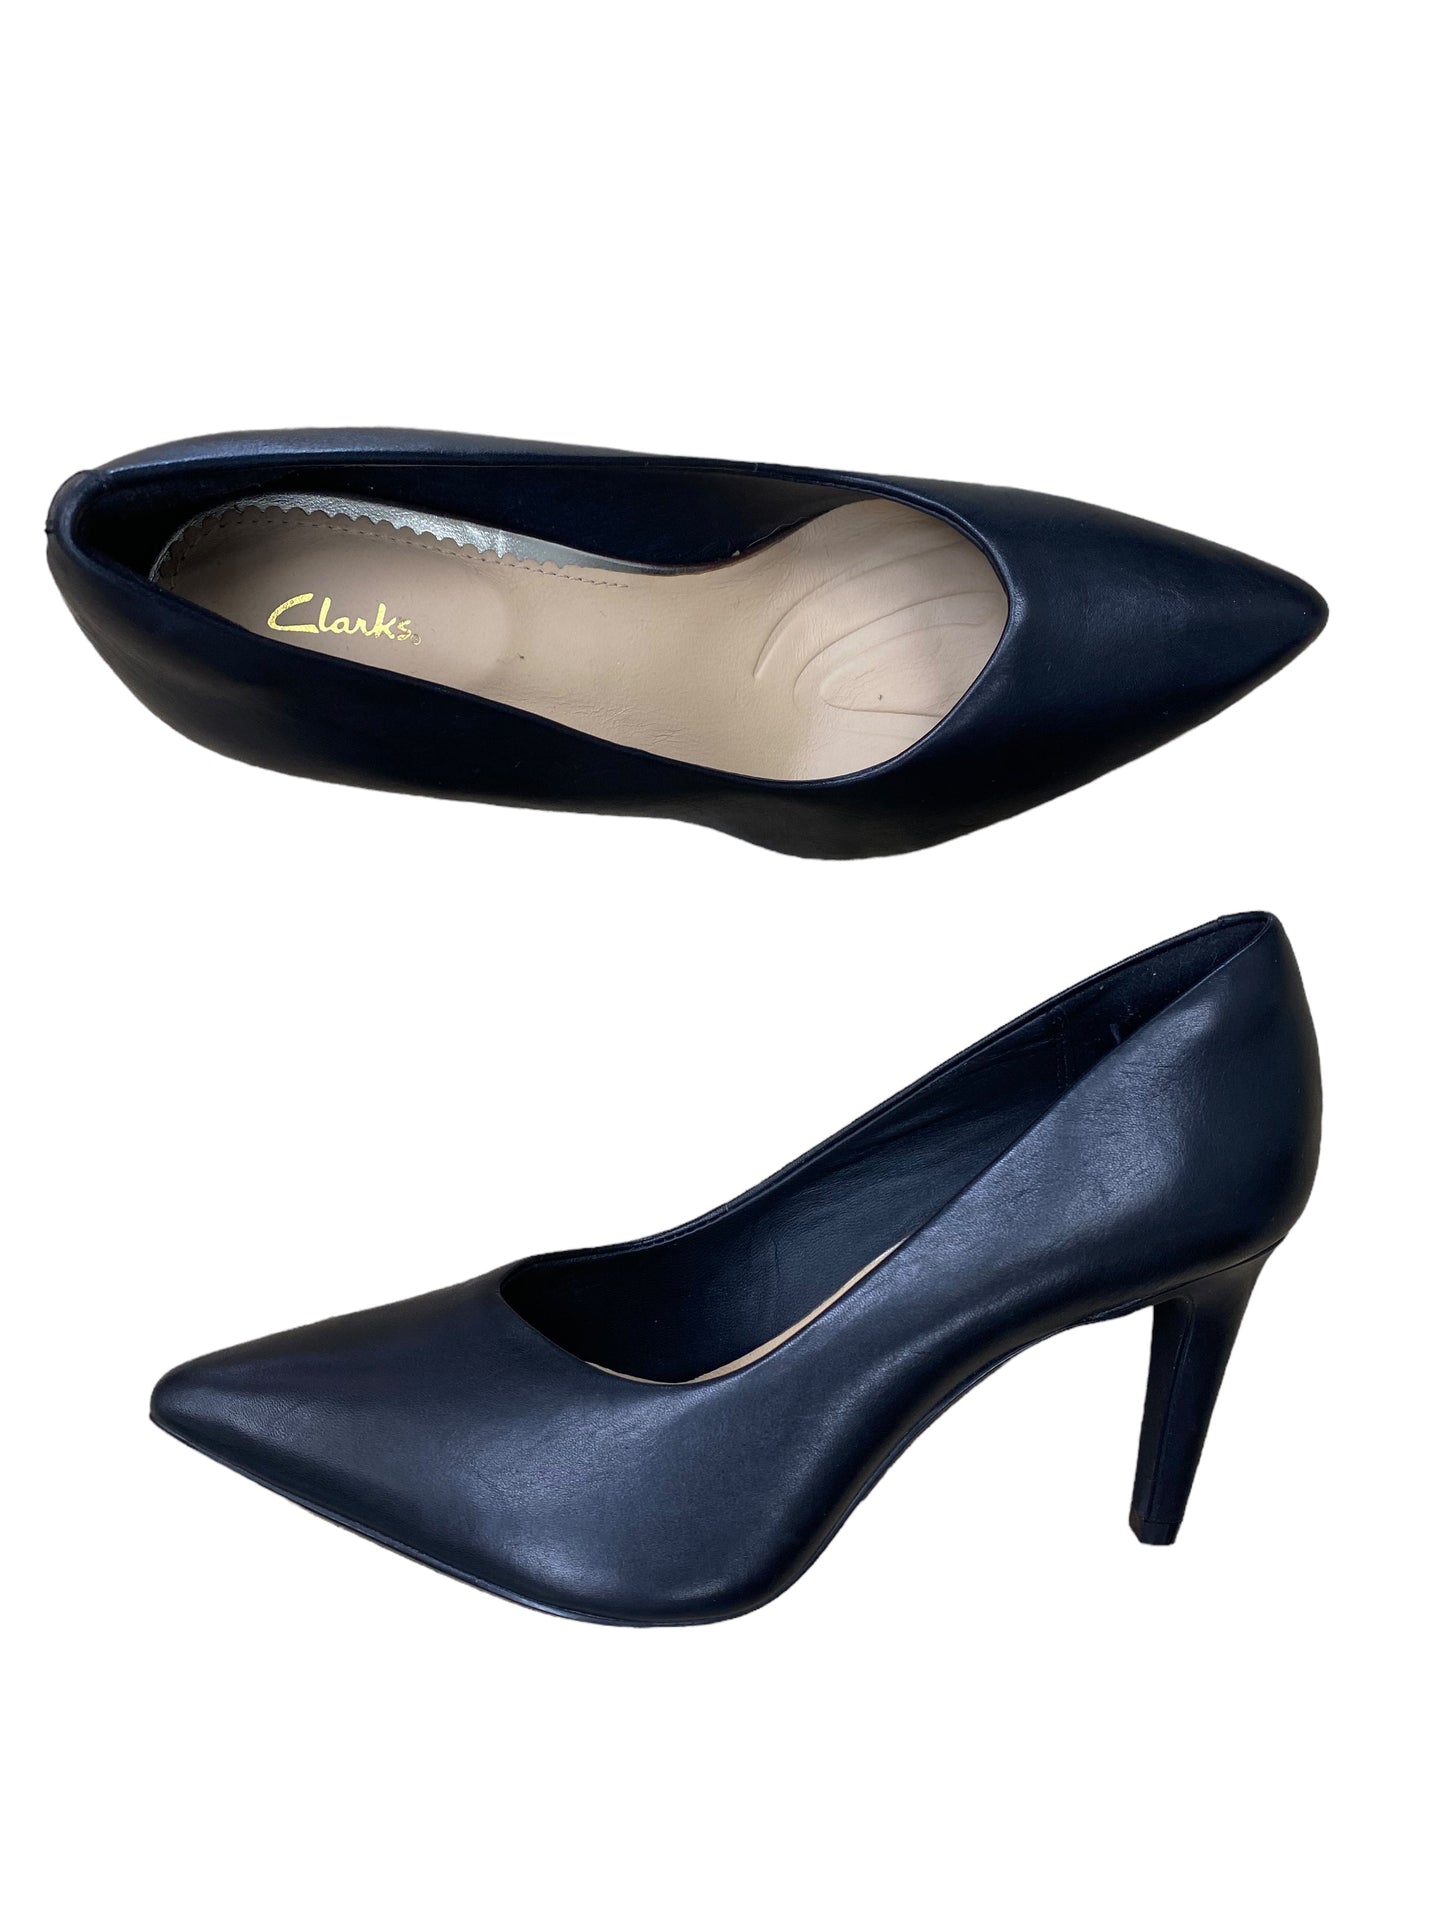 Black Shoes Heels Stiletto Clarks, Size 6.5